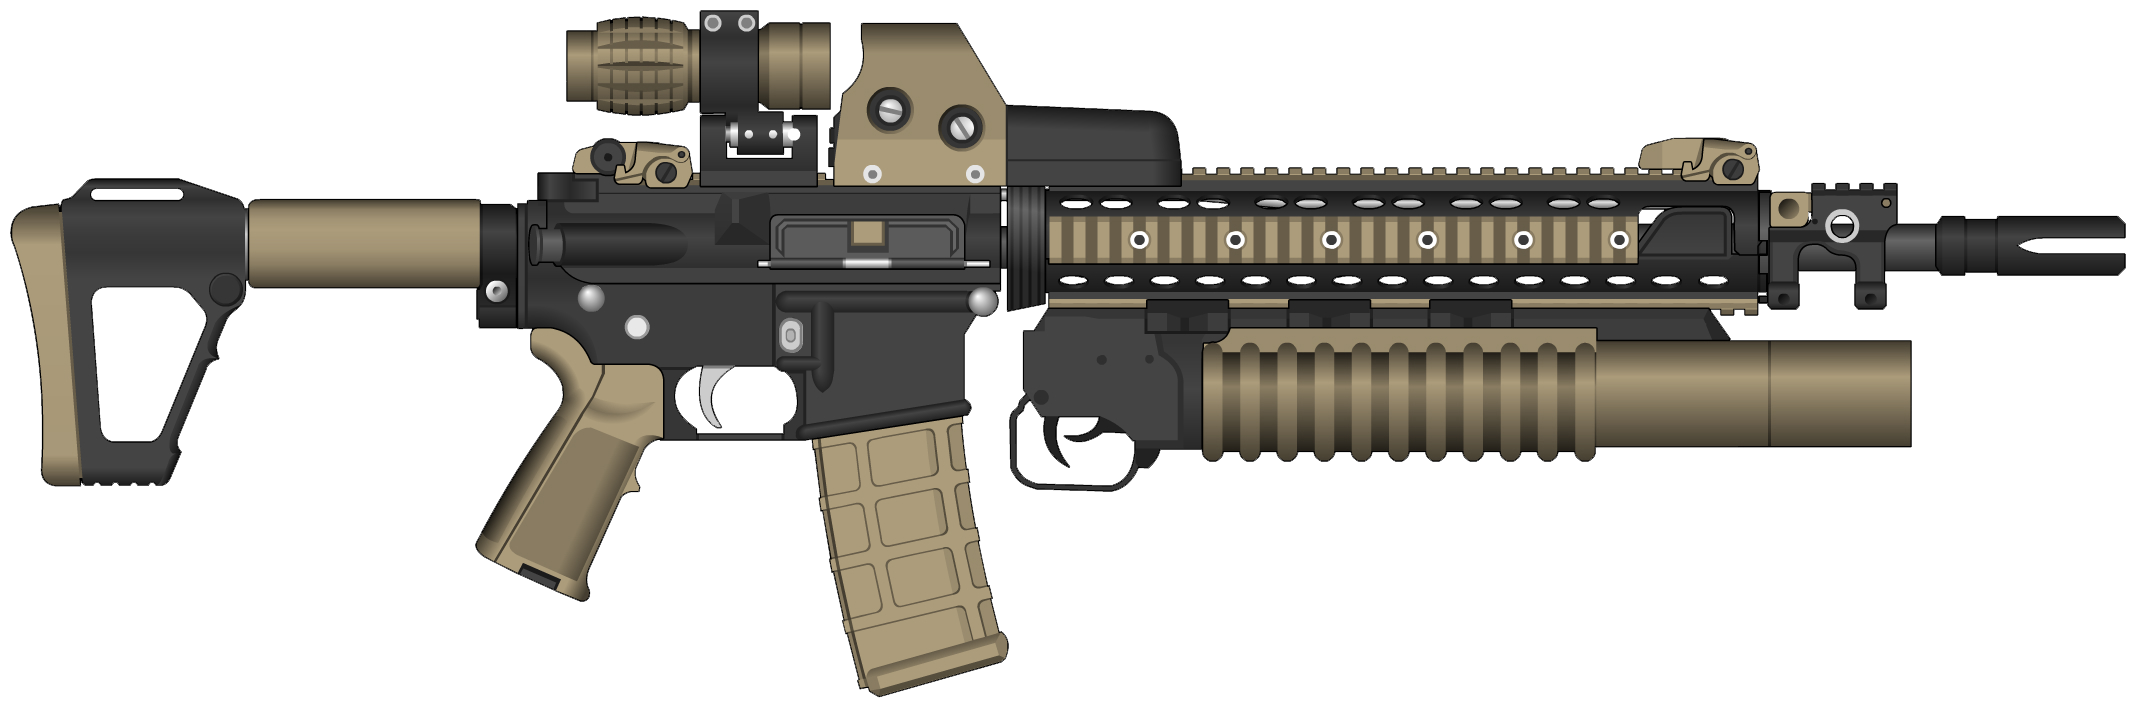 Assault Rifle Png - Rifle, Transparent background PNG HD thumbnail